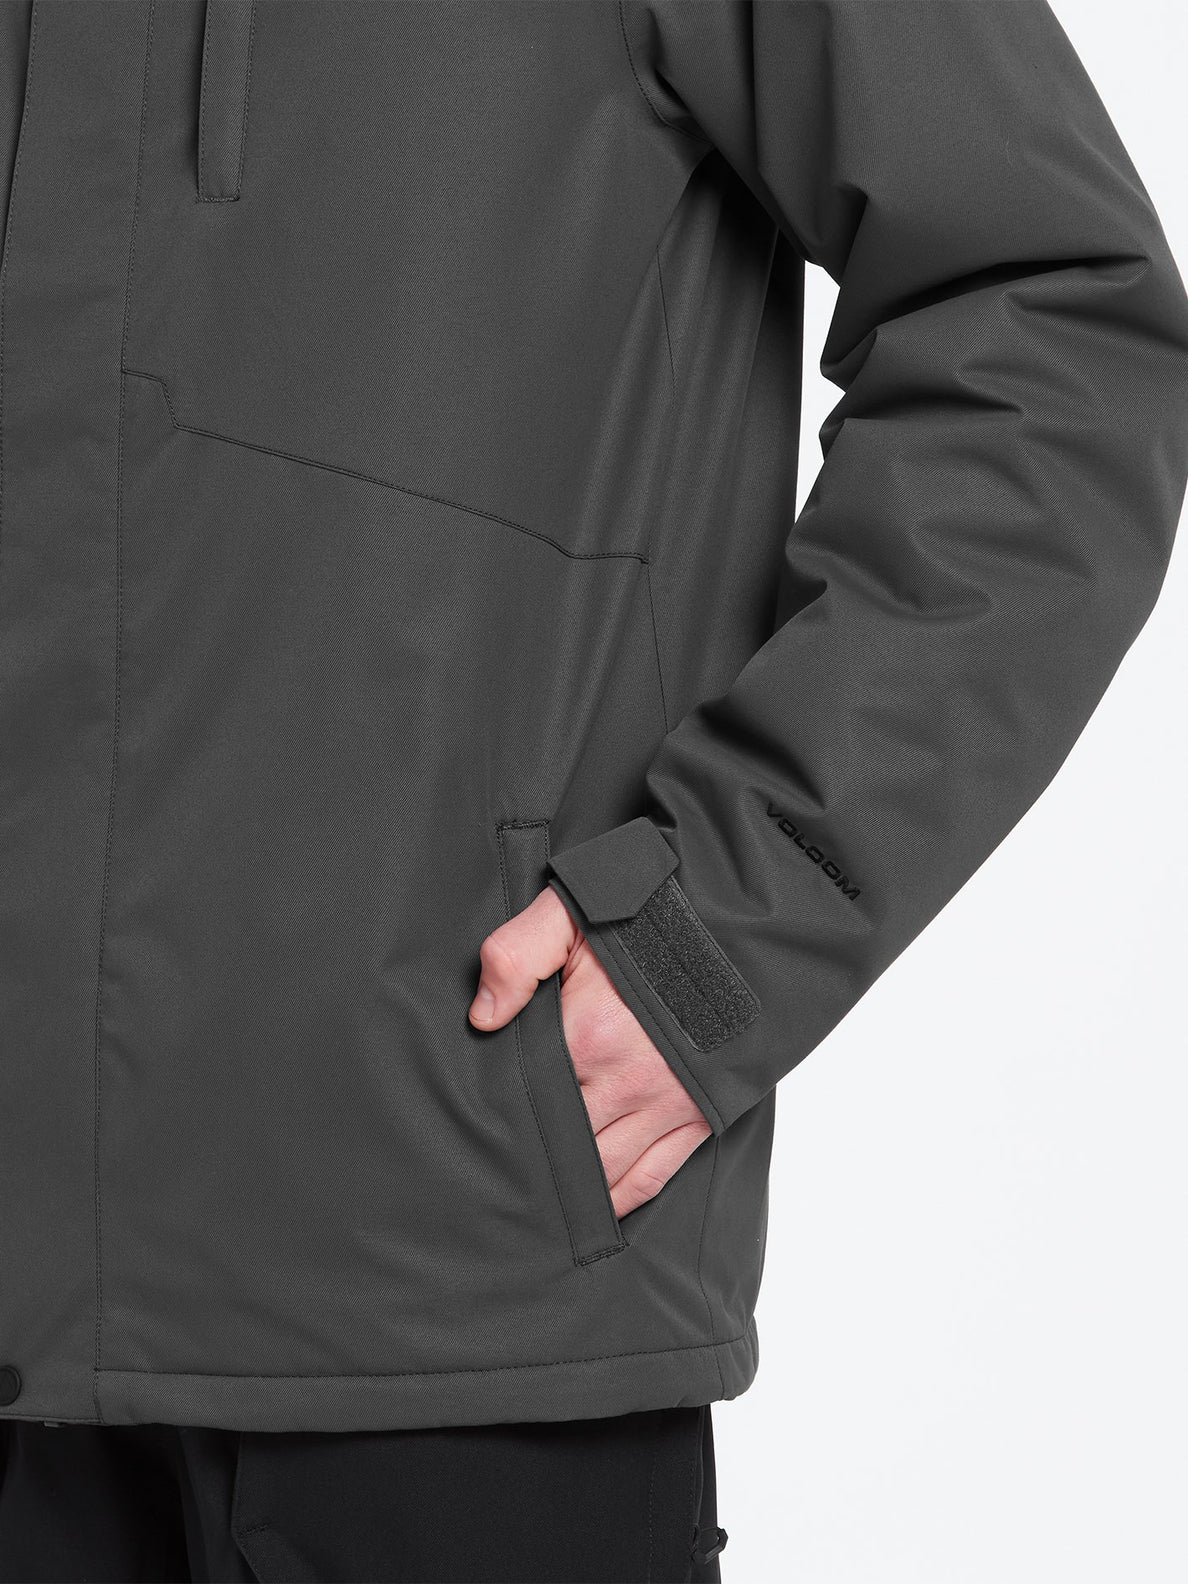 17Forty Insulated Jacket - DARK GREY (G0452114_DGR) [58]